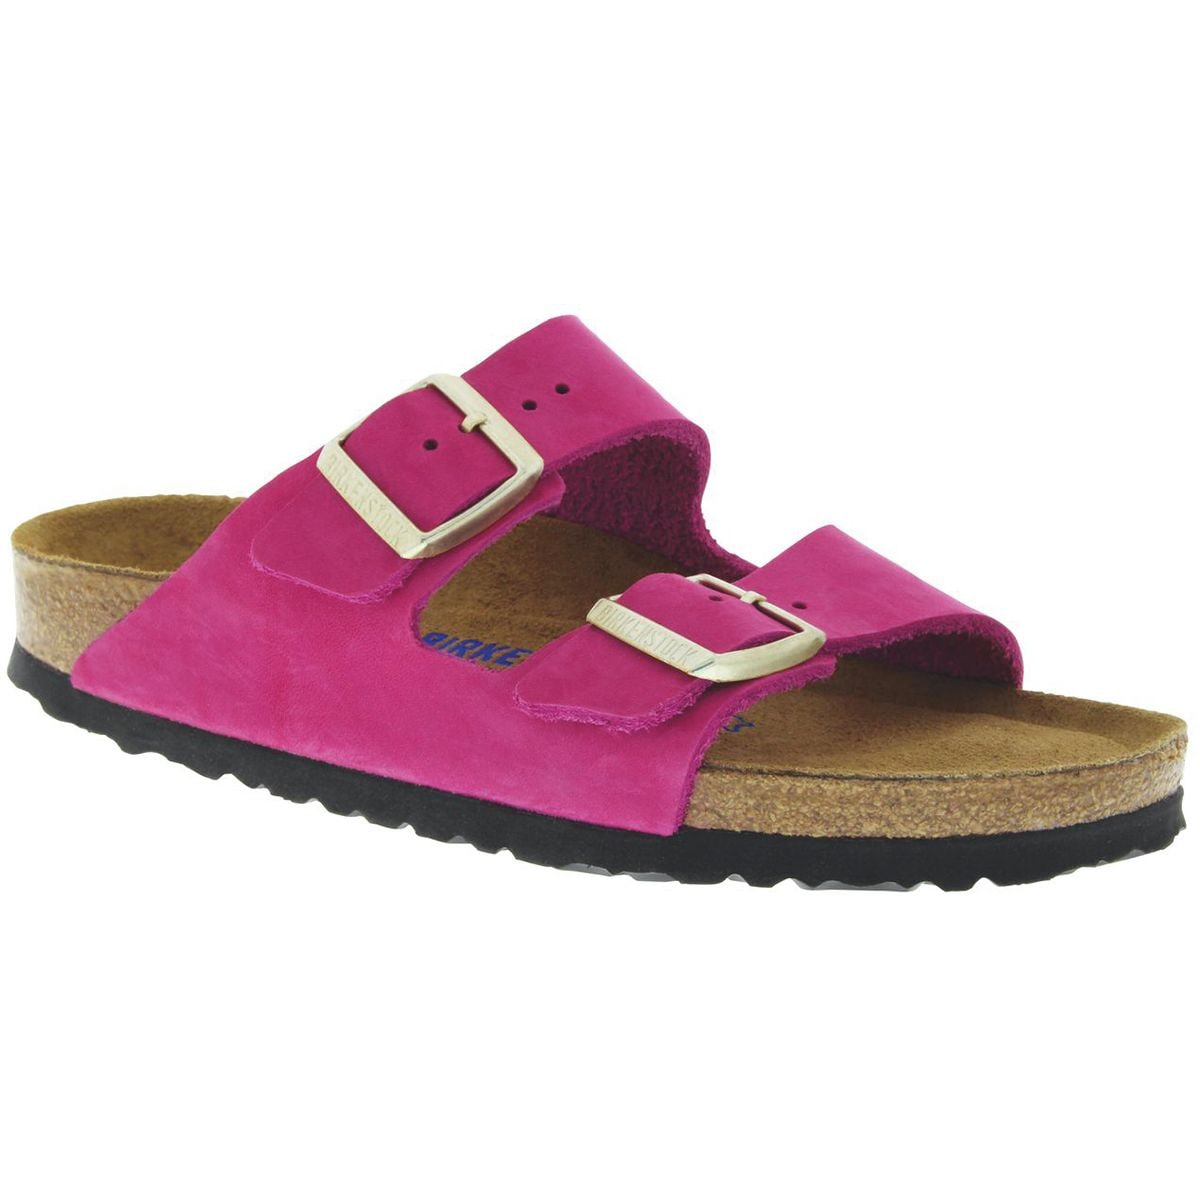 Arizona Soft Footbed Limited Edition Narrow Sandal - Women